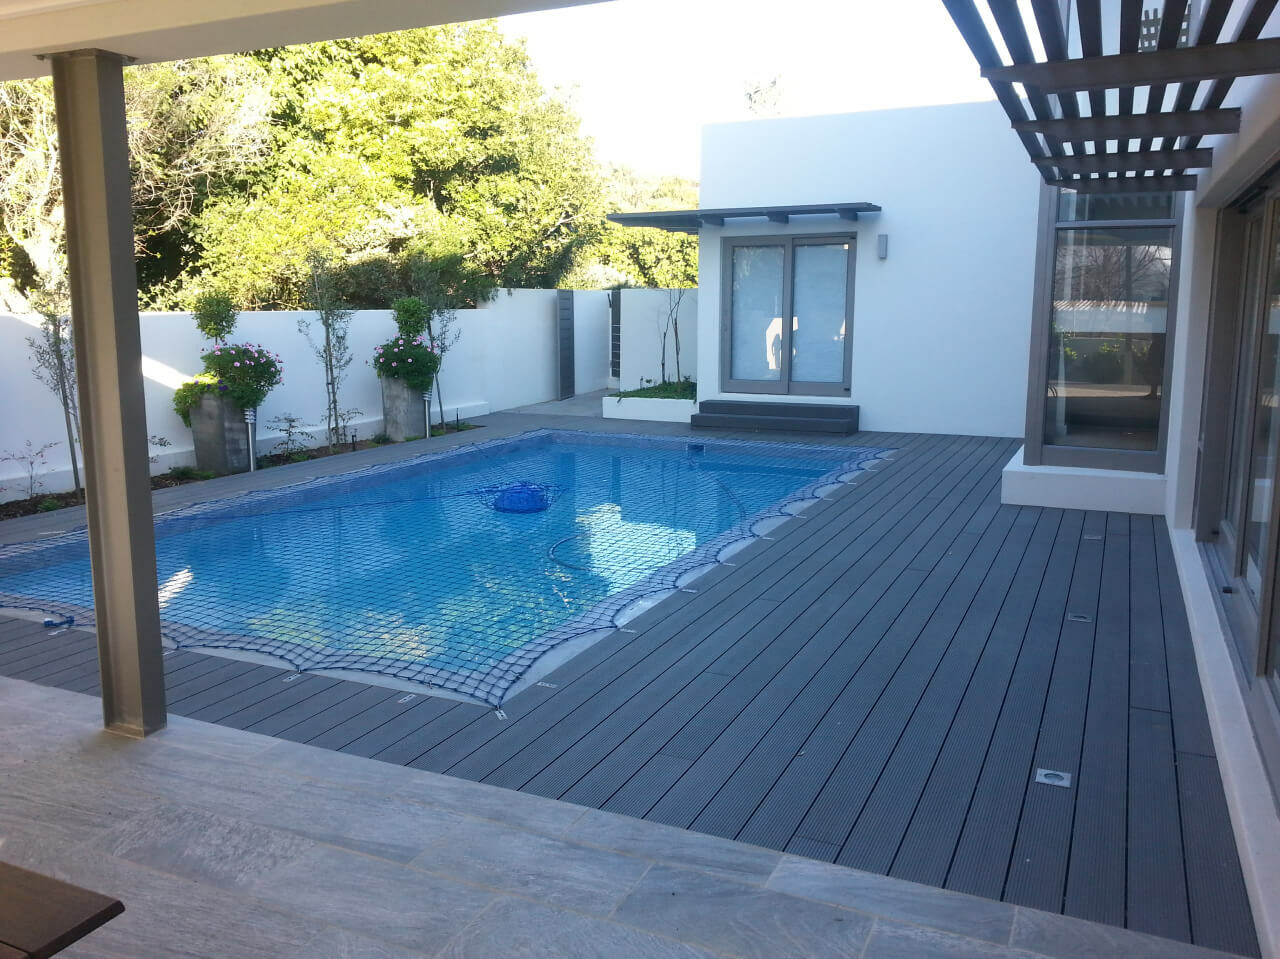 Composite Deck around pool